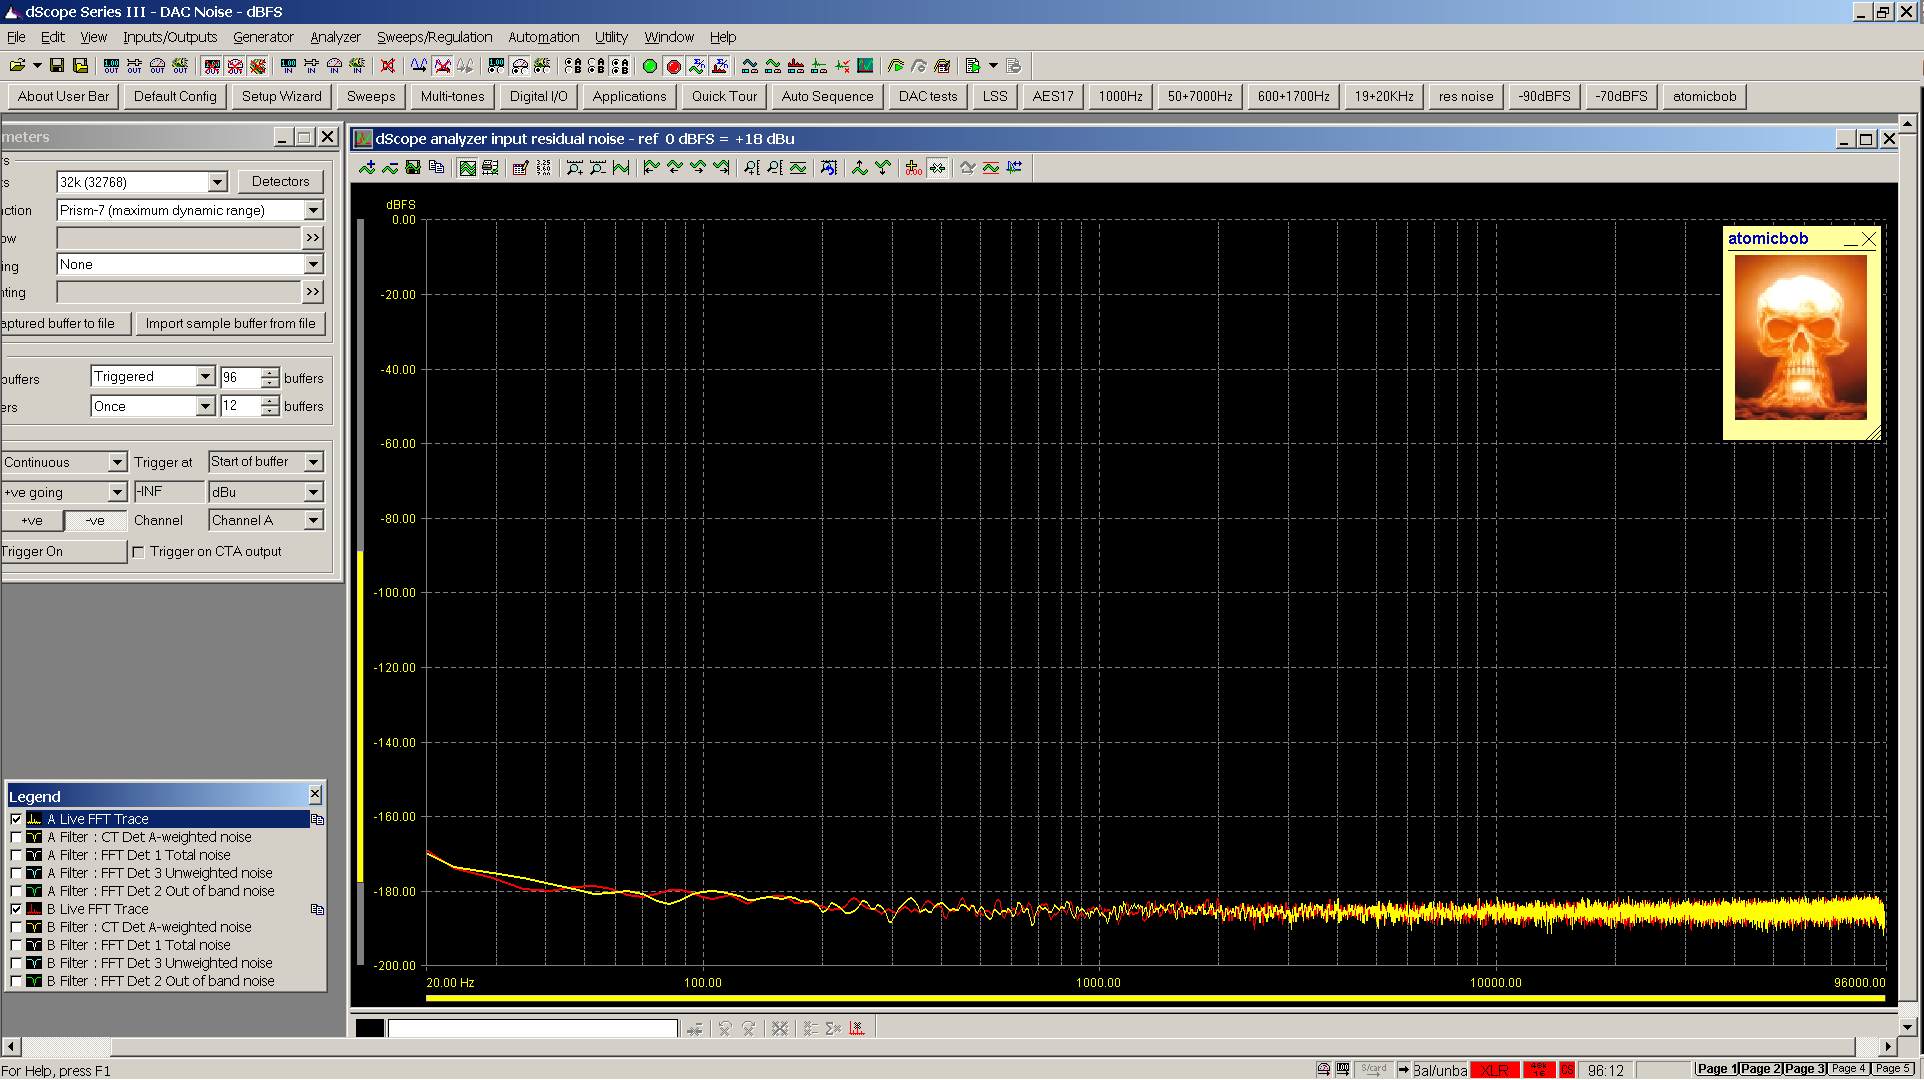 04 20210613 dScope analyzer input residual noise 2a  FFT 32K 96-12.png